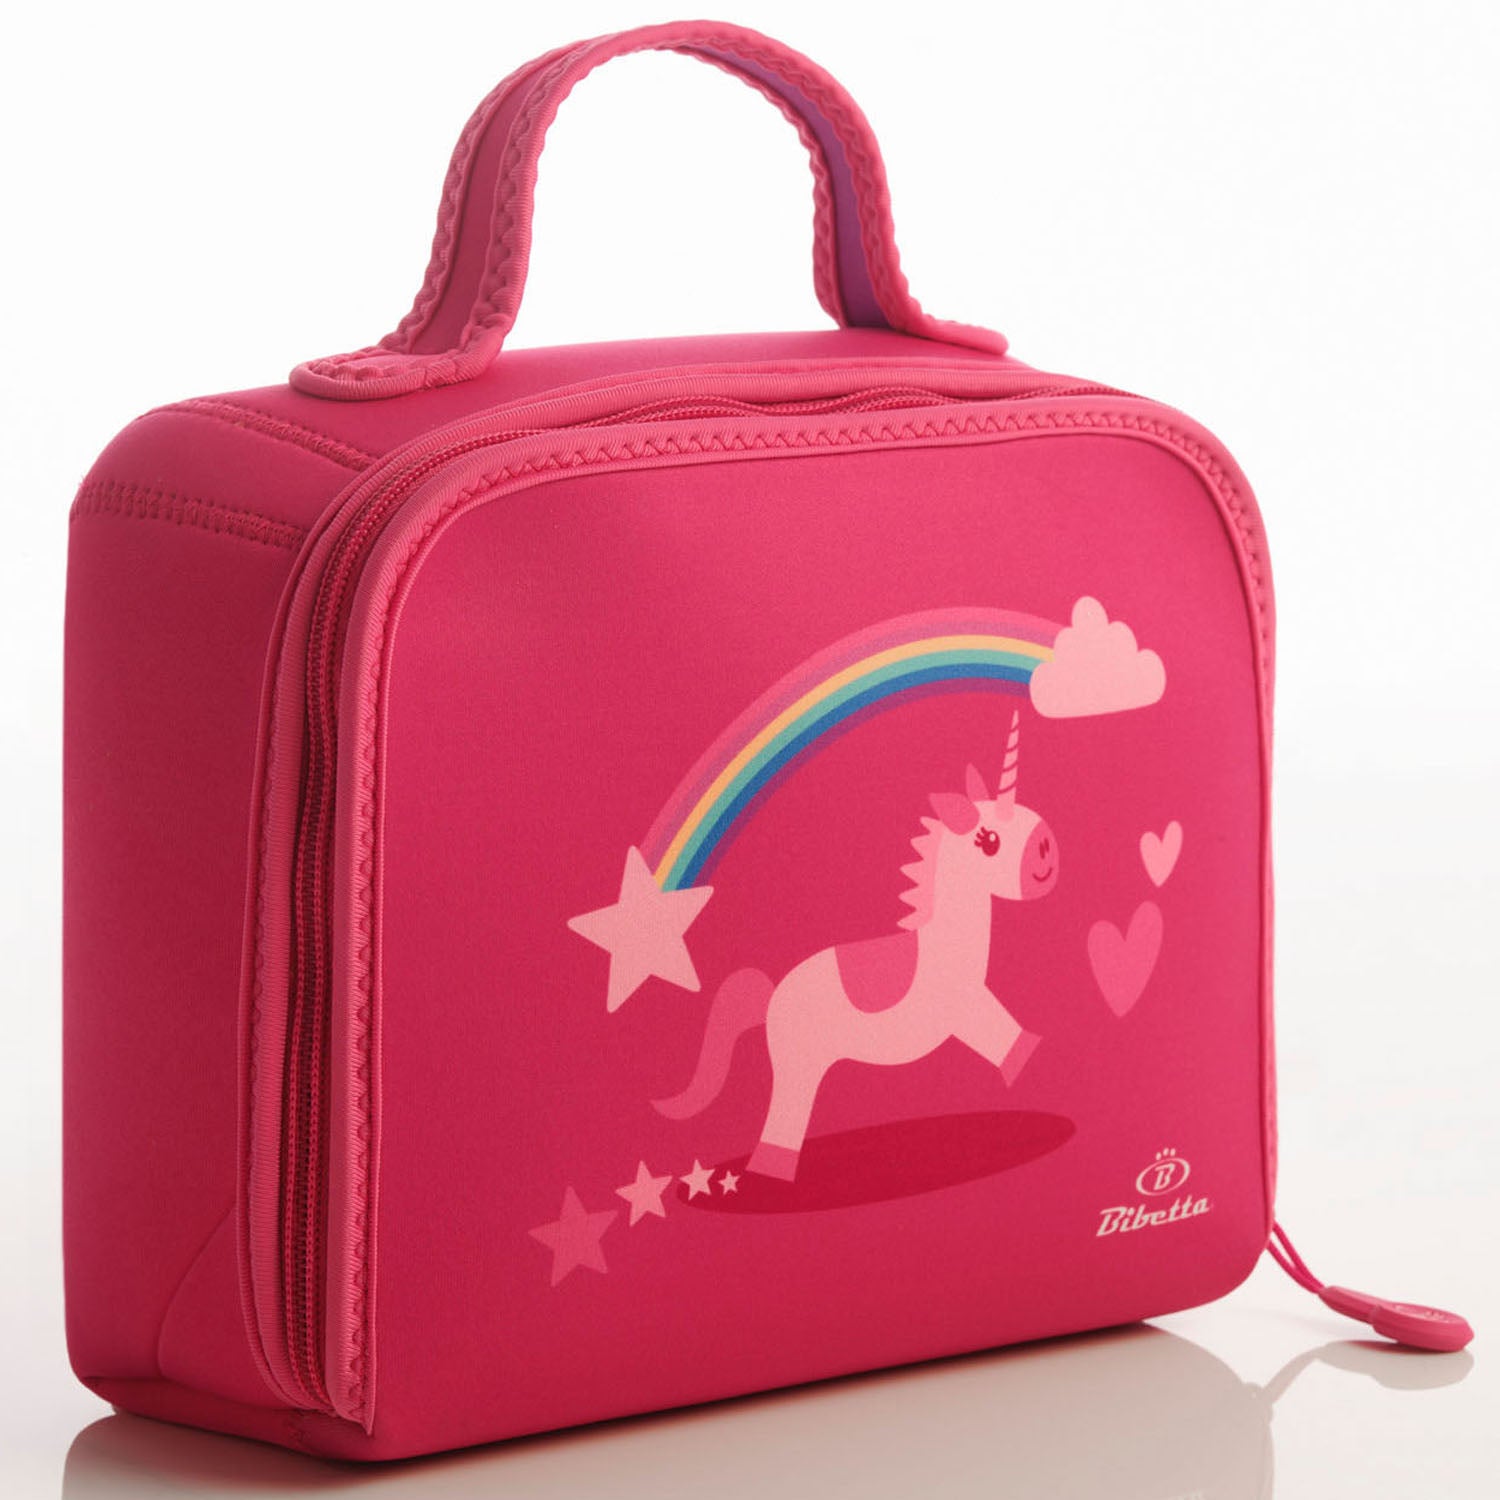 Lunch Bag - Unicorns | Lunch Boxes & Totes | Bibetta